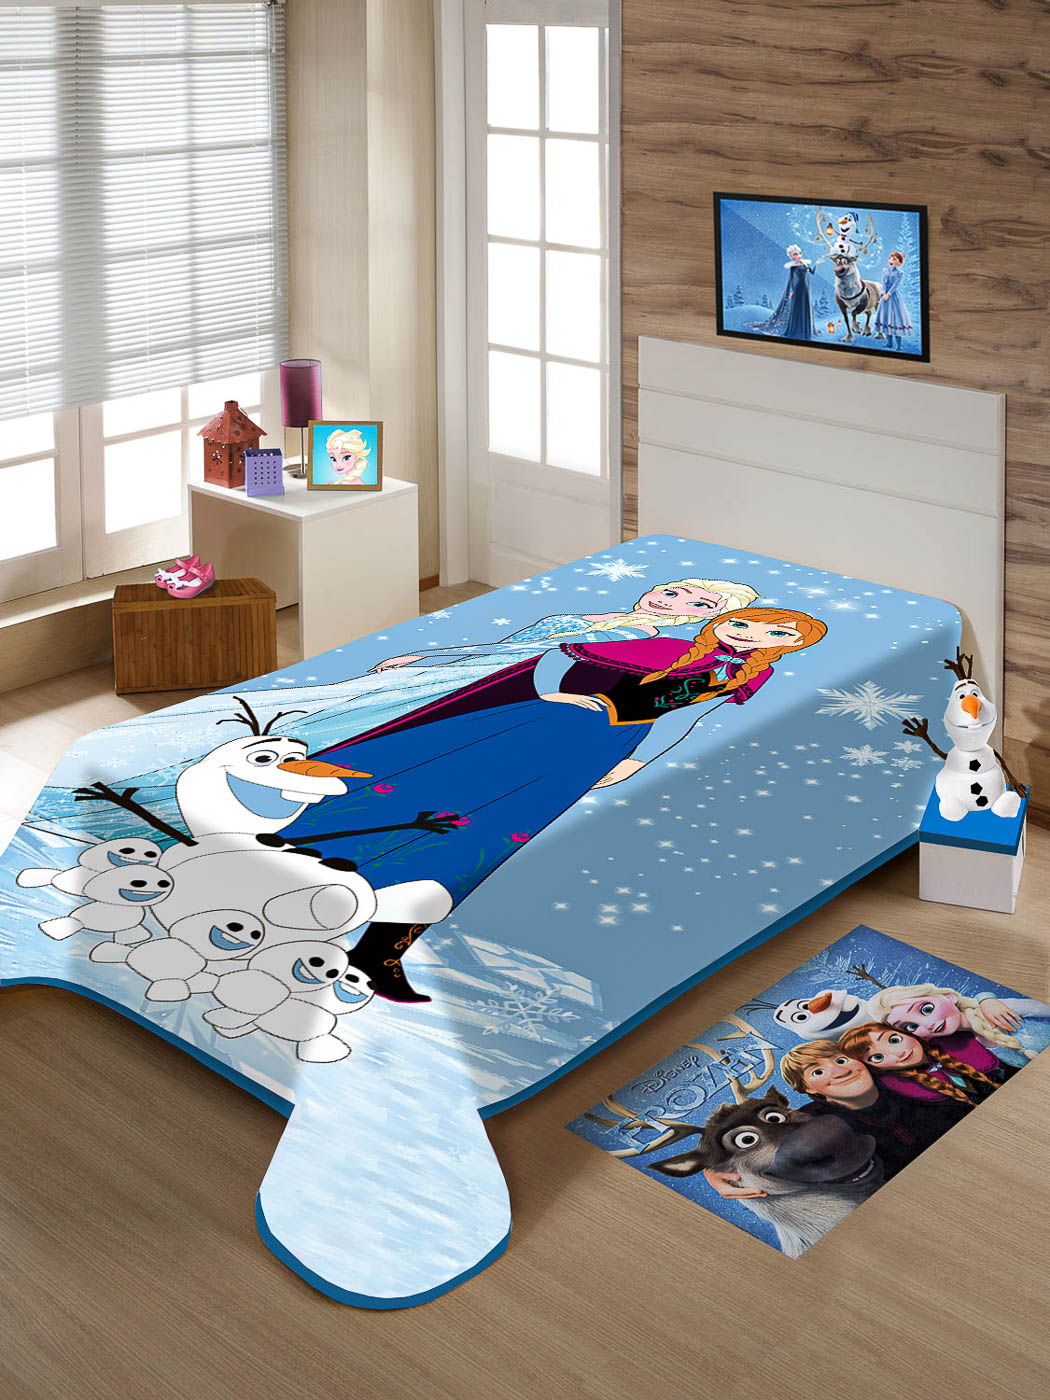 Cobertor Juvenil Jolitex Solteiro 1,50x2,00m Disney Frozen